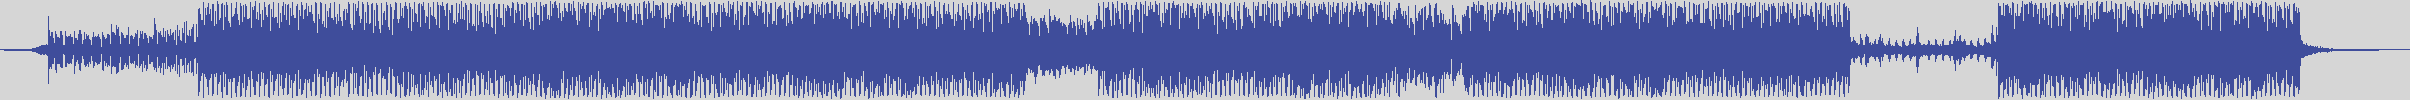 definitiva [DEF001] De - Javu - I Can't Stop [Radio Edit] audio wave form